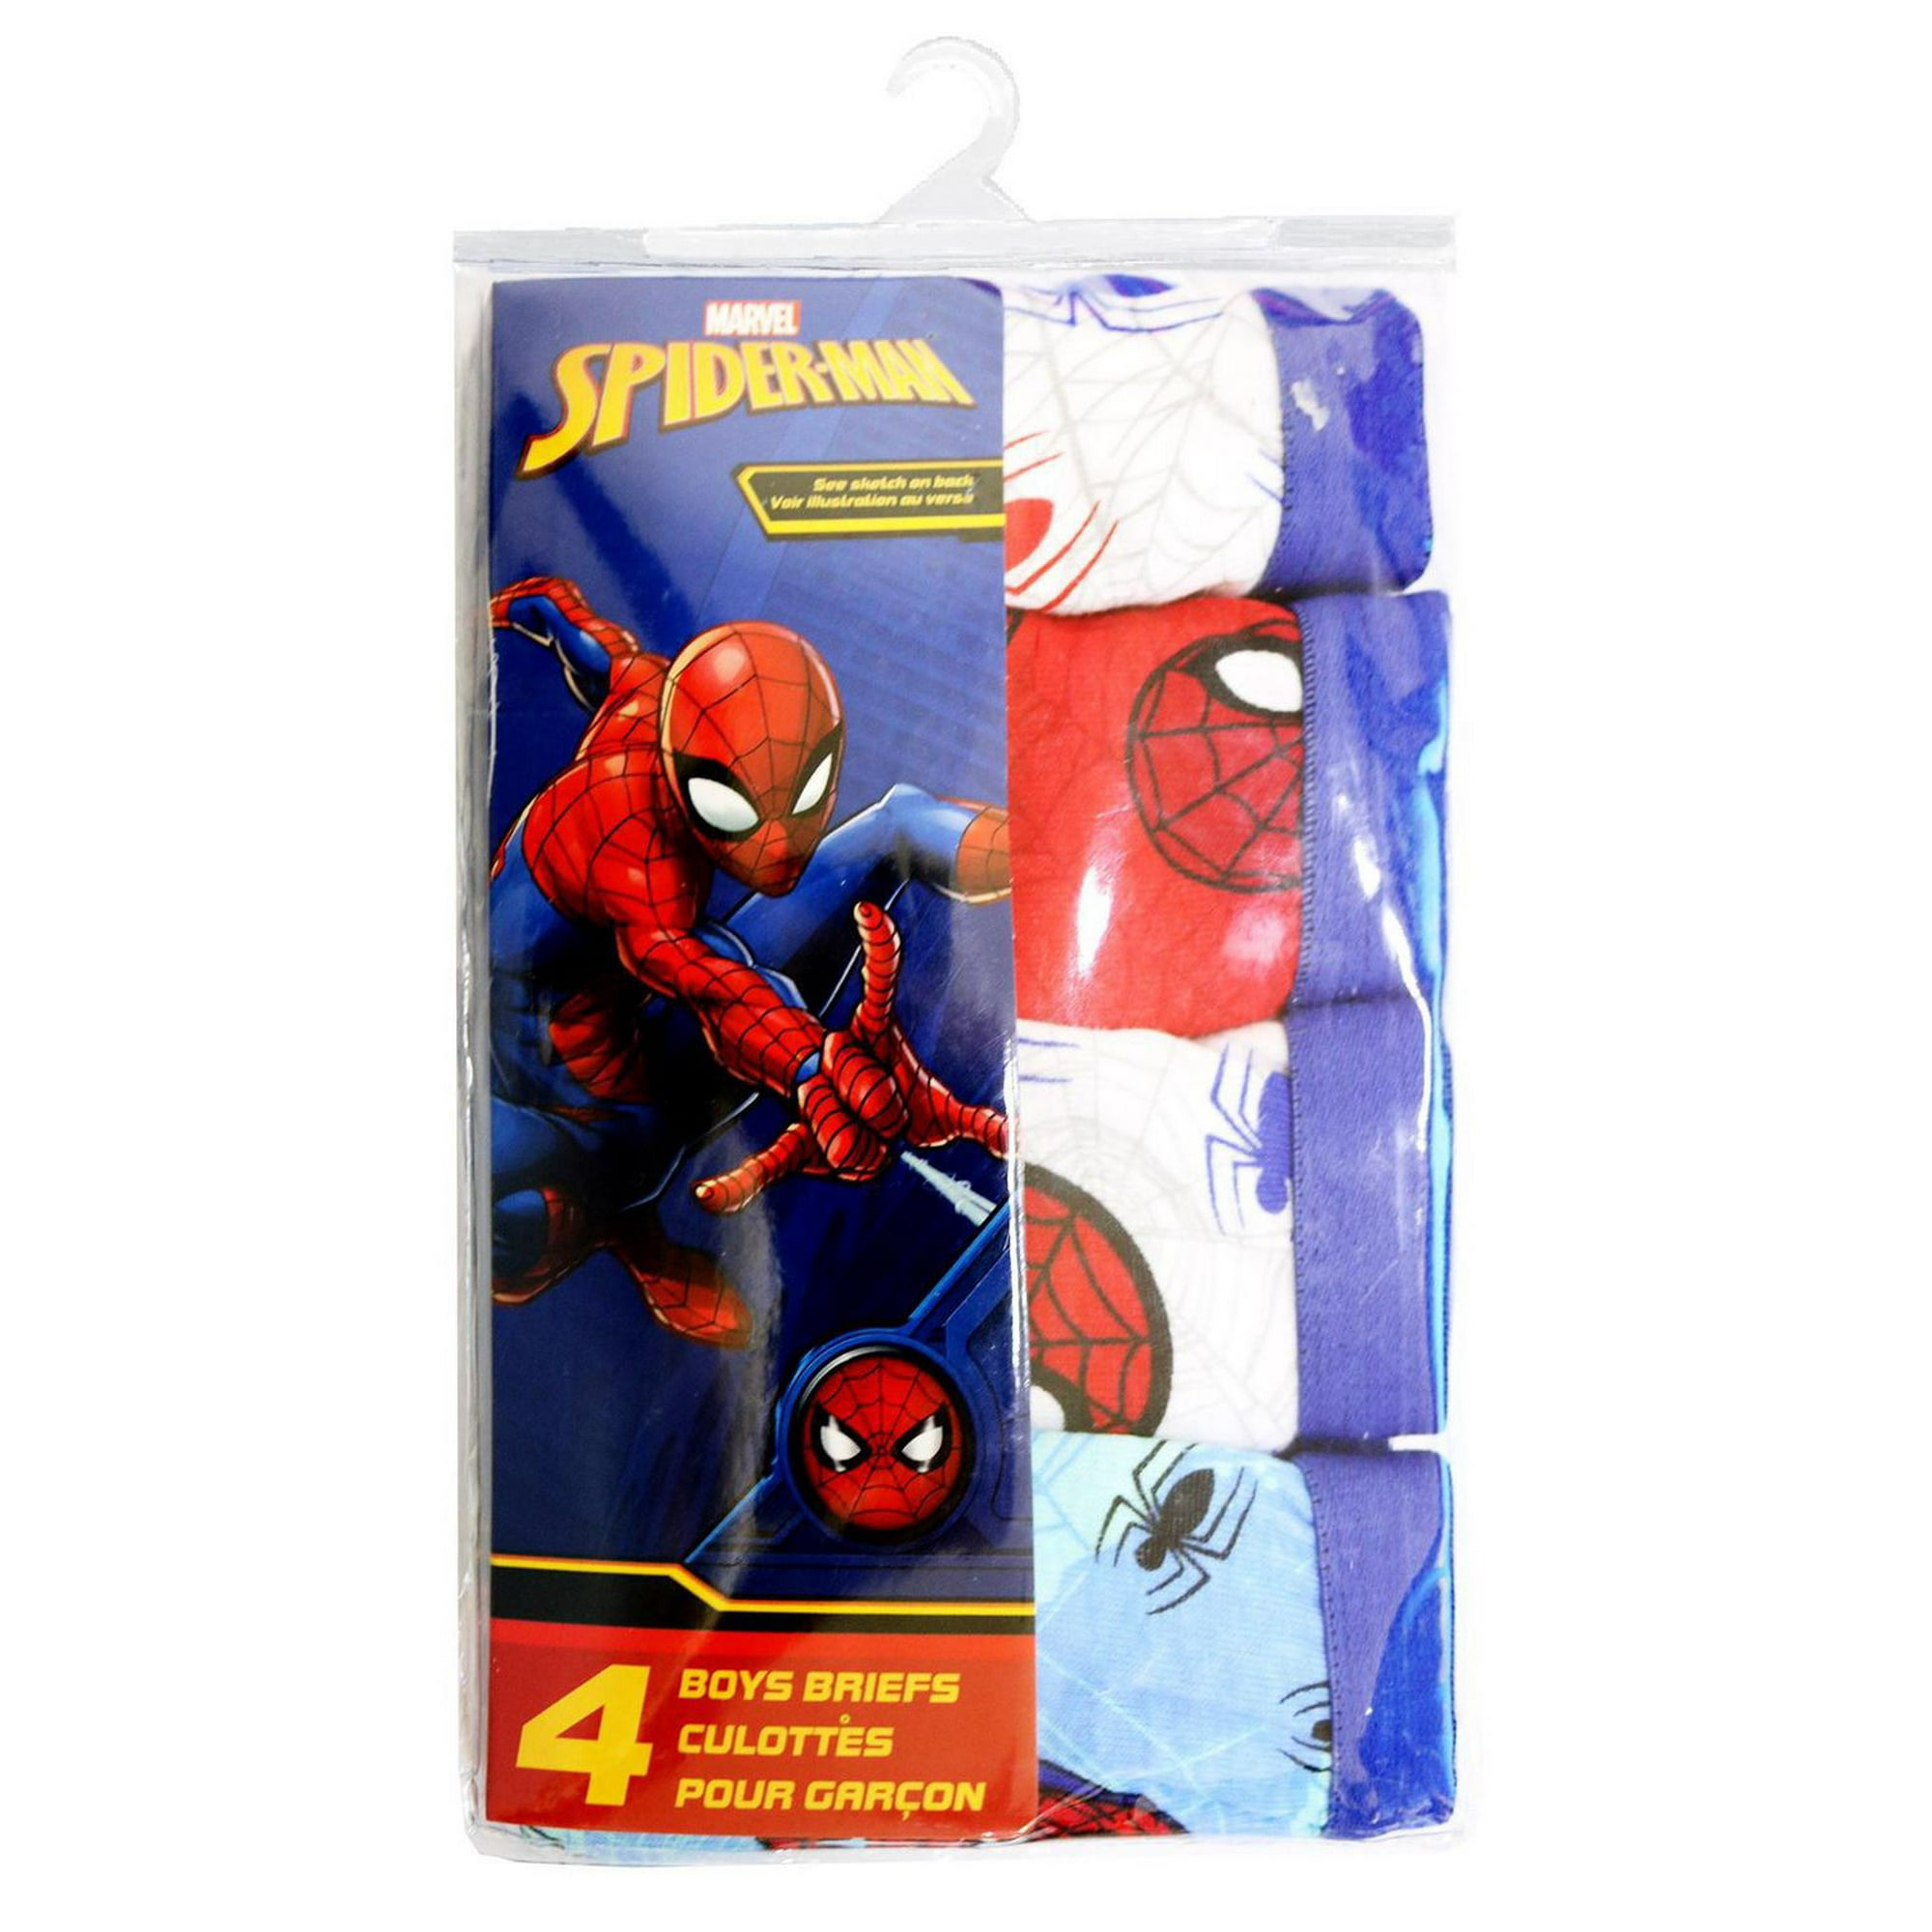 Set of 3 pieces of underwear 'Spiderman' - Bambinokids